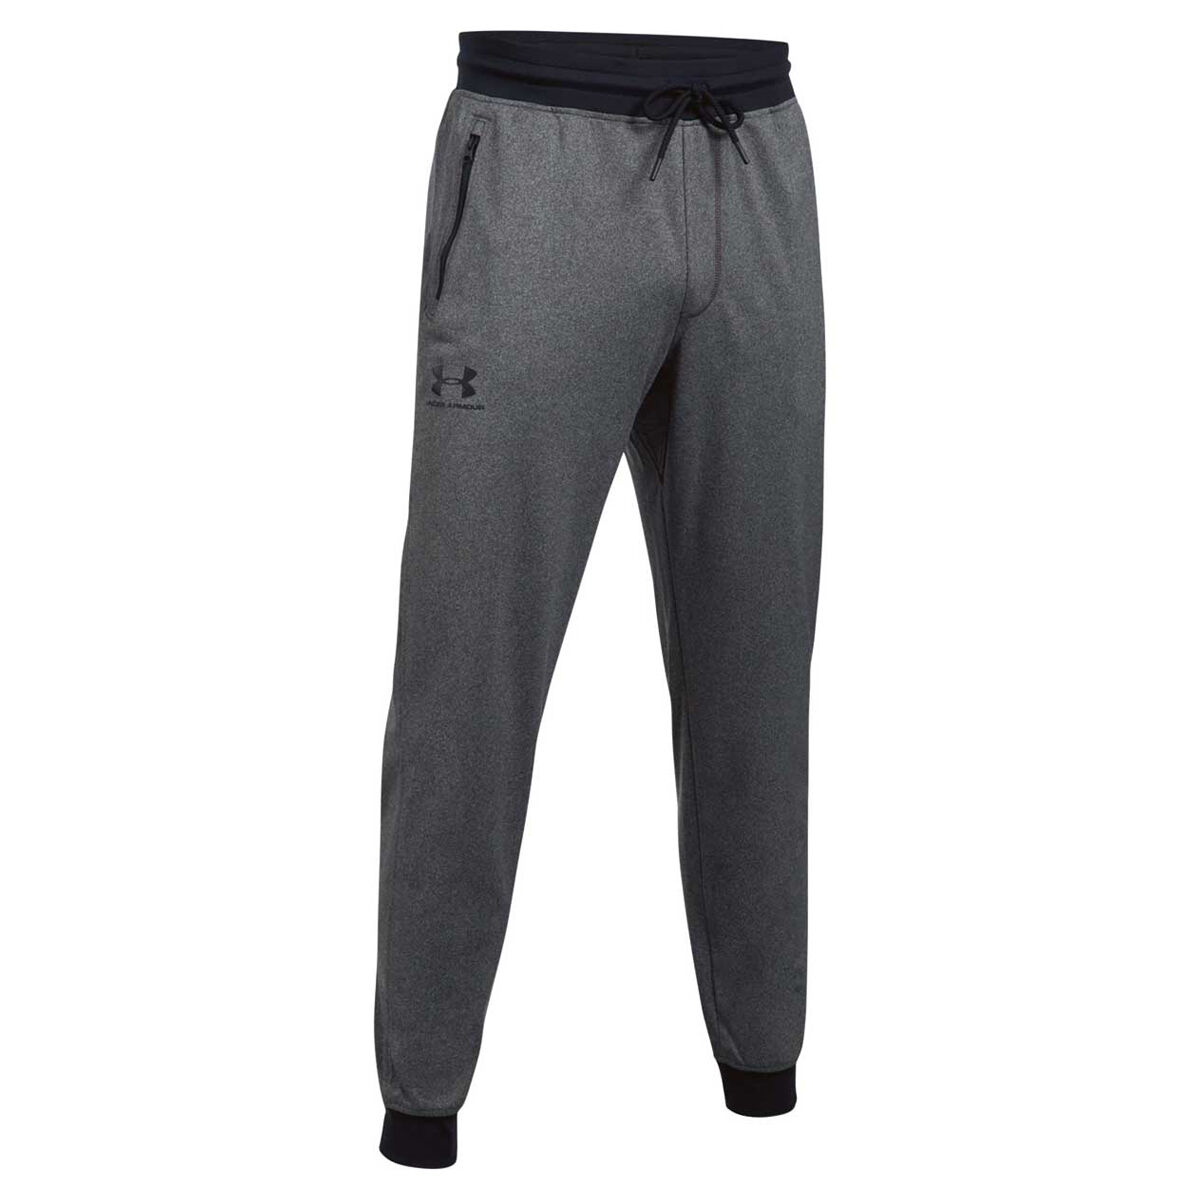 Trackpants: Shop Men Dark Grey 100% Cotton Trackpants Online - Cliths.com